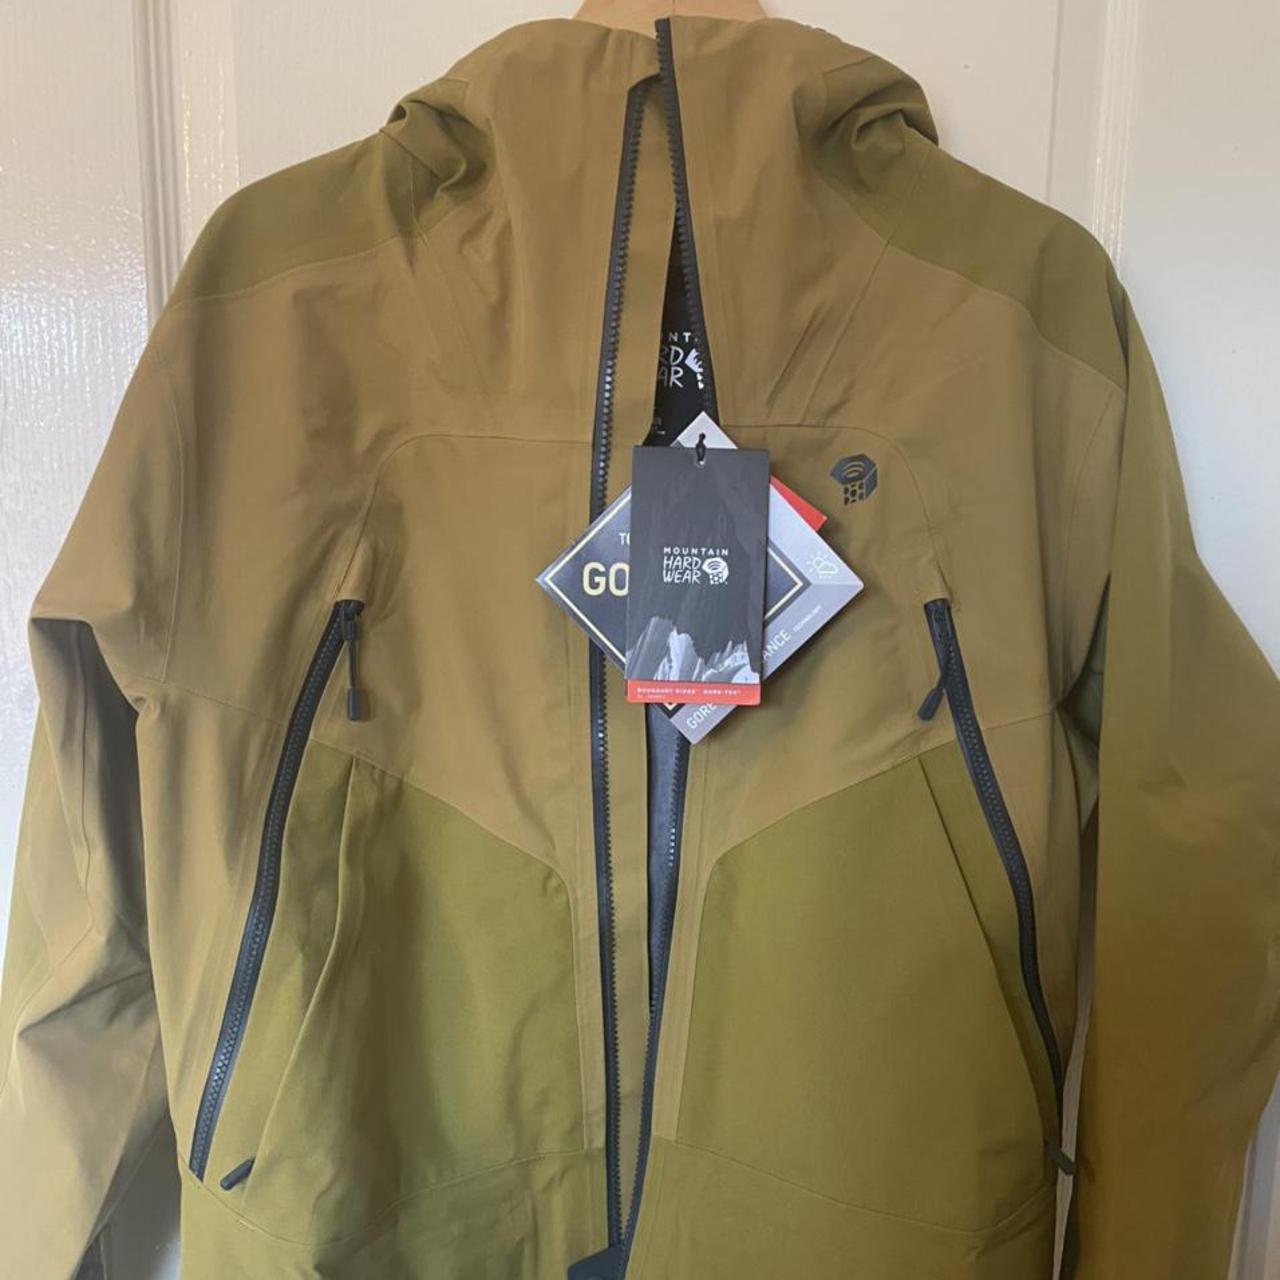 Mountain hardware boundary ridge GTX jacket (dark... - Depop